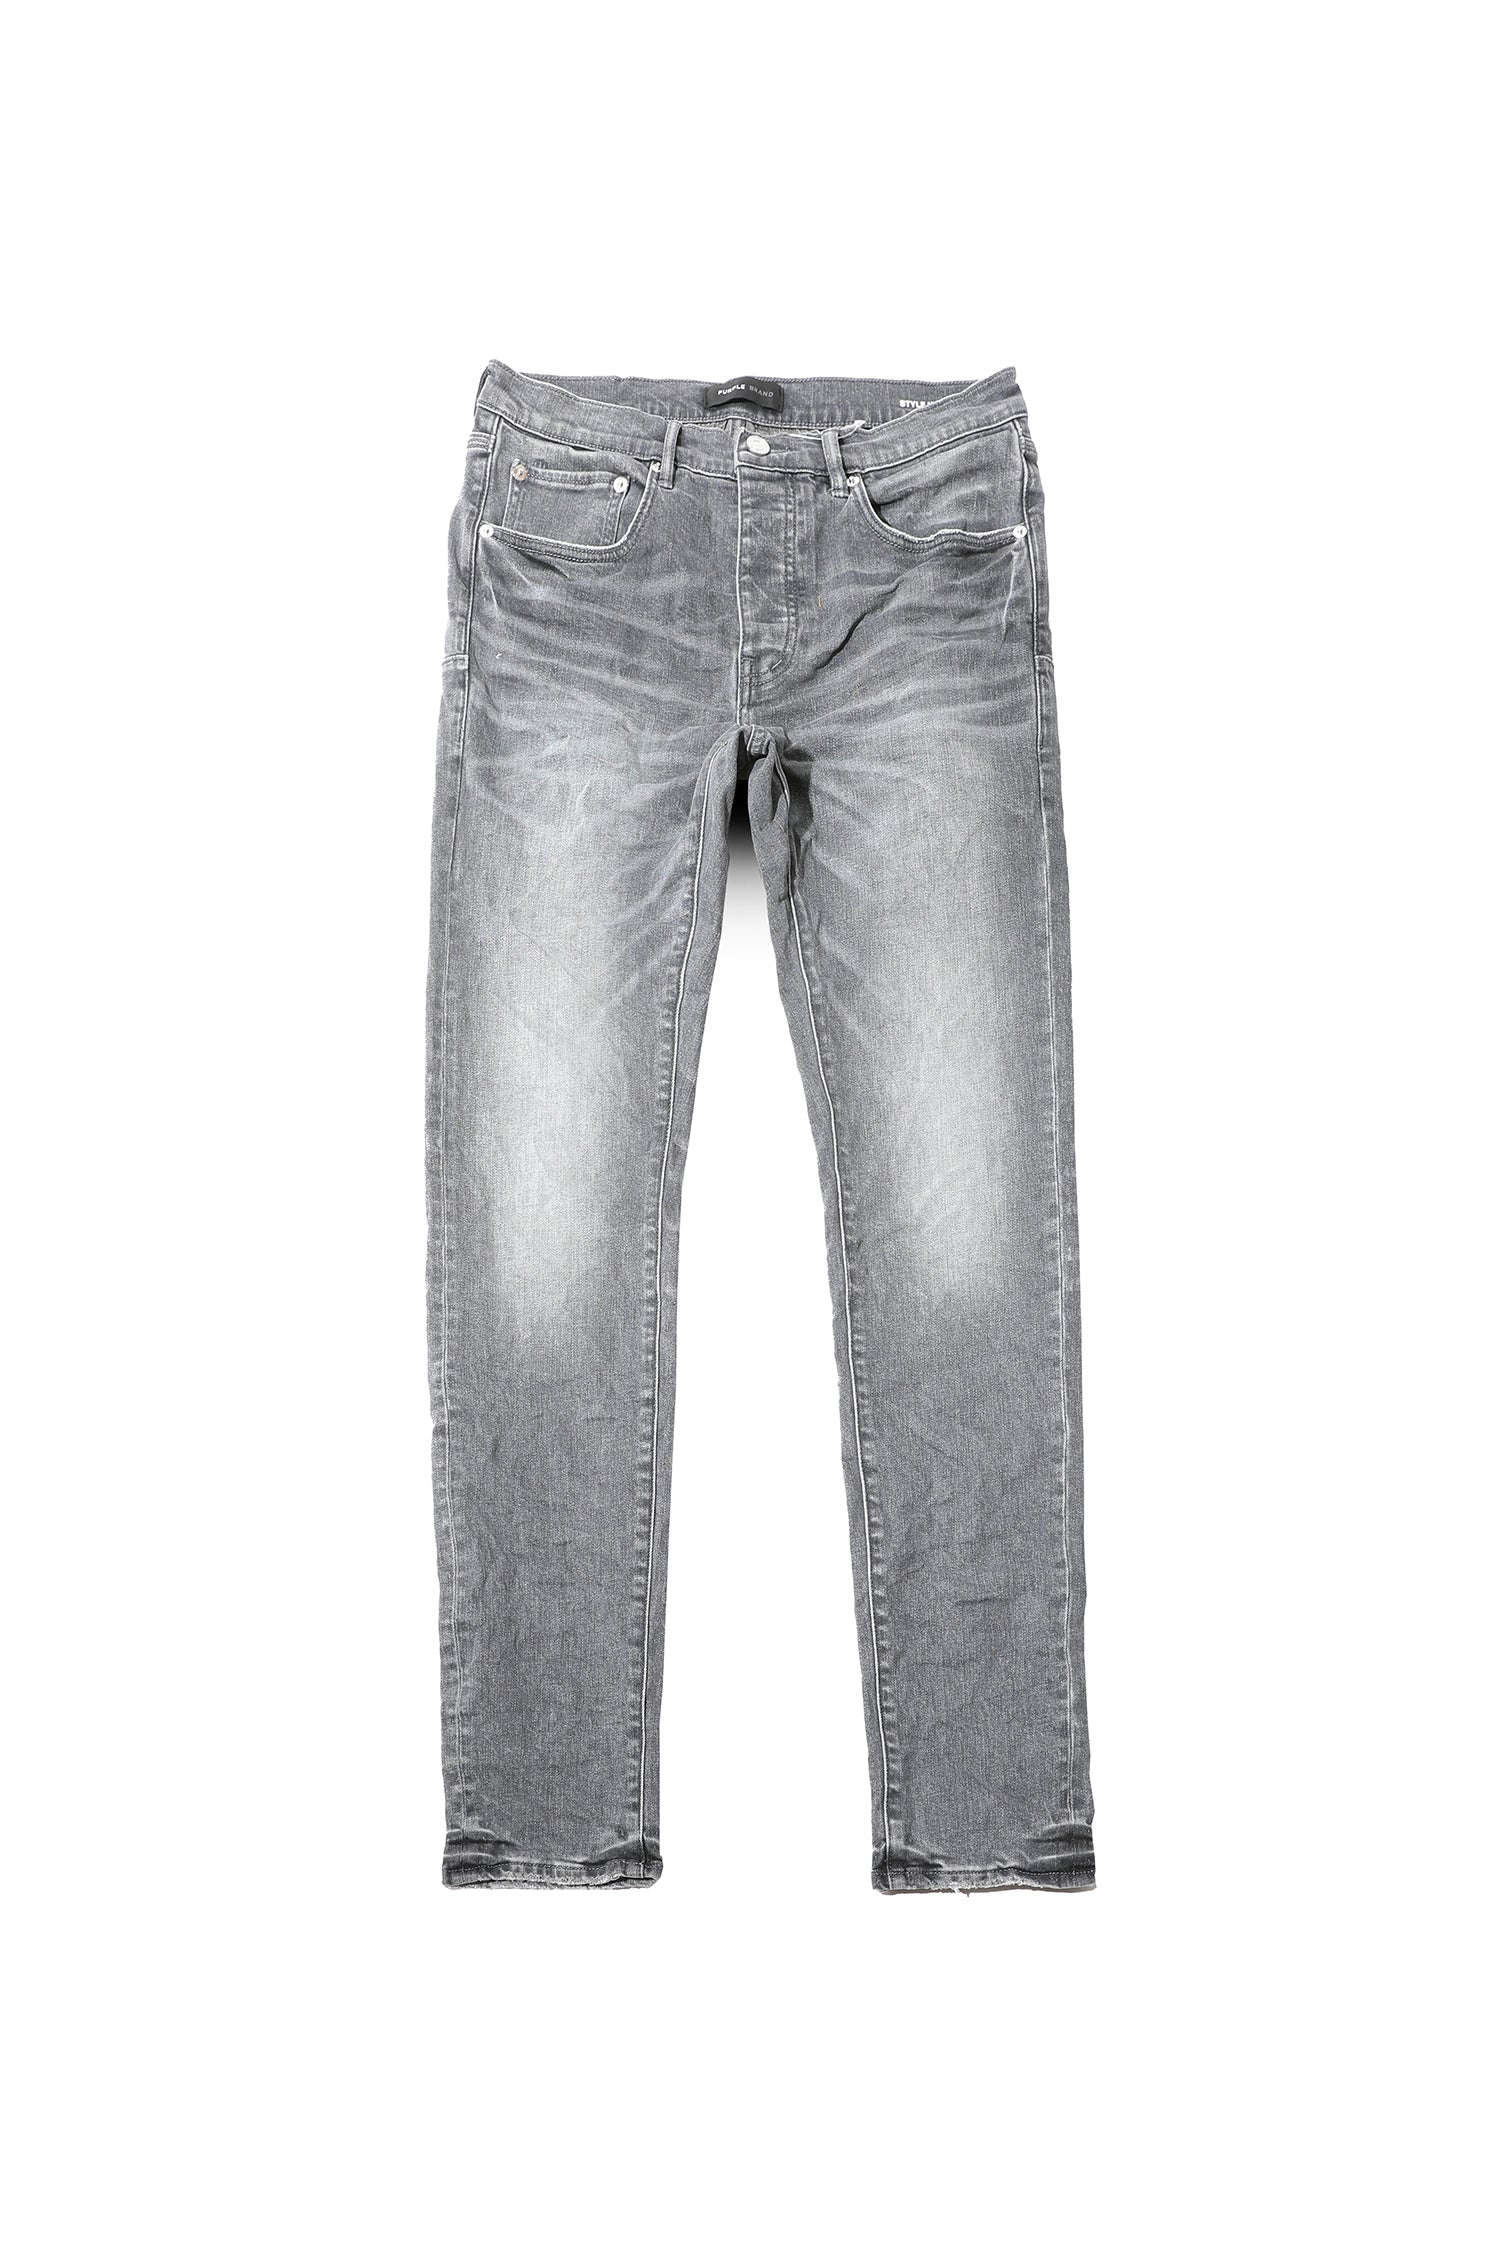 Purple Brand Vintage Slate Jeans - GREY - Civilized Nation - Official Site